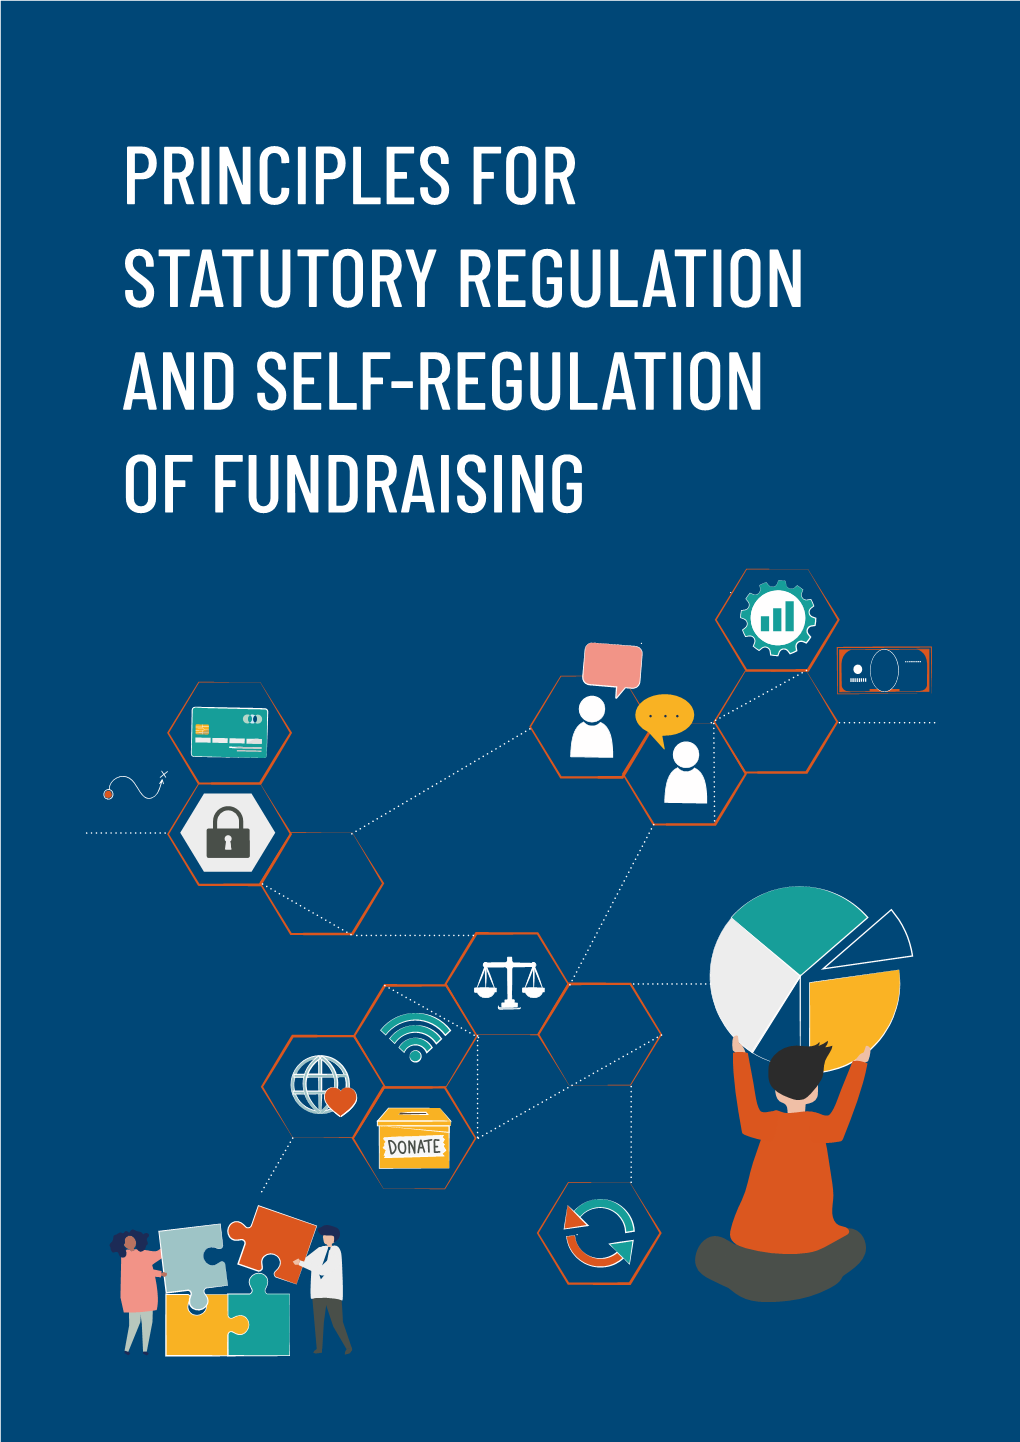 Principles for Statutory Regulation and Self-Regulation of Fundraising